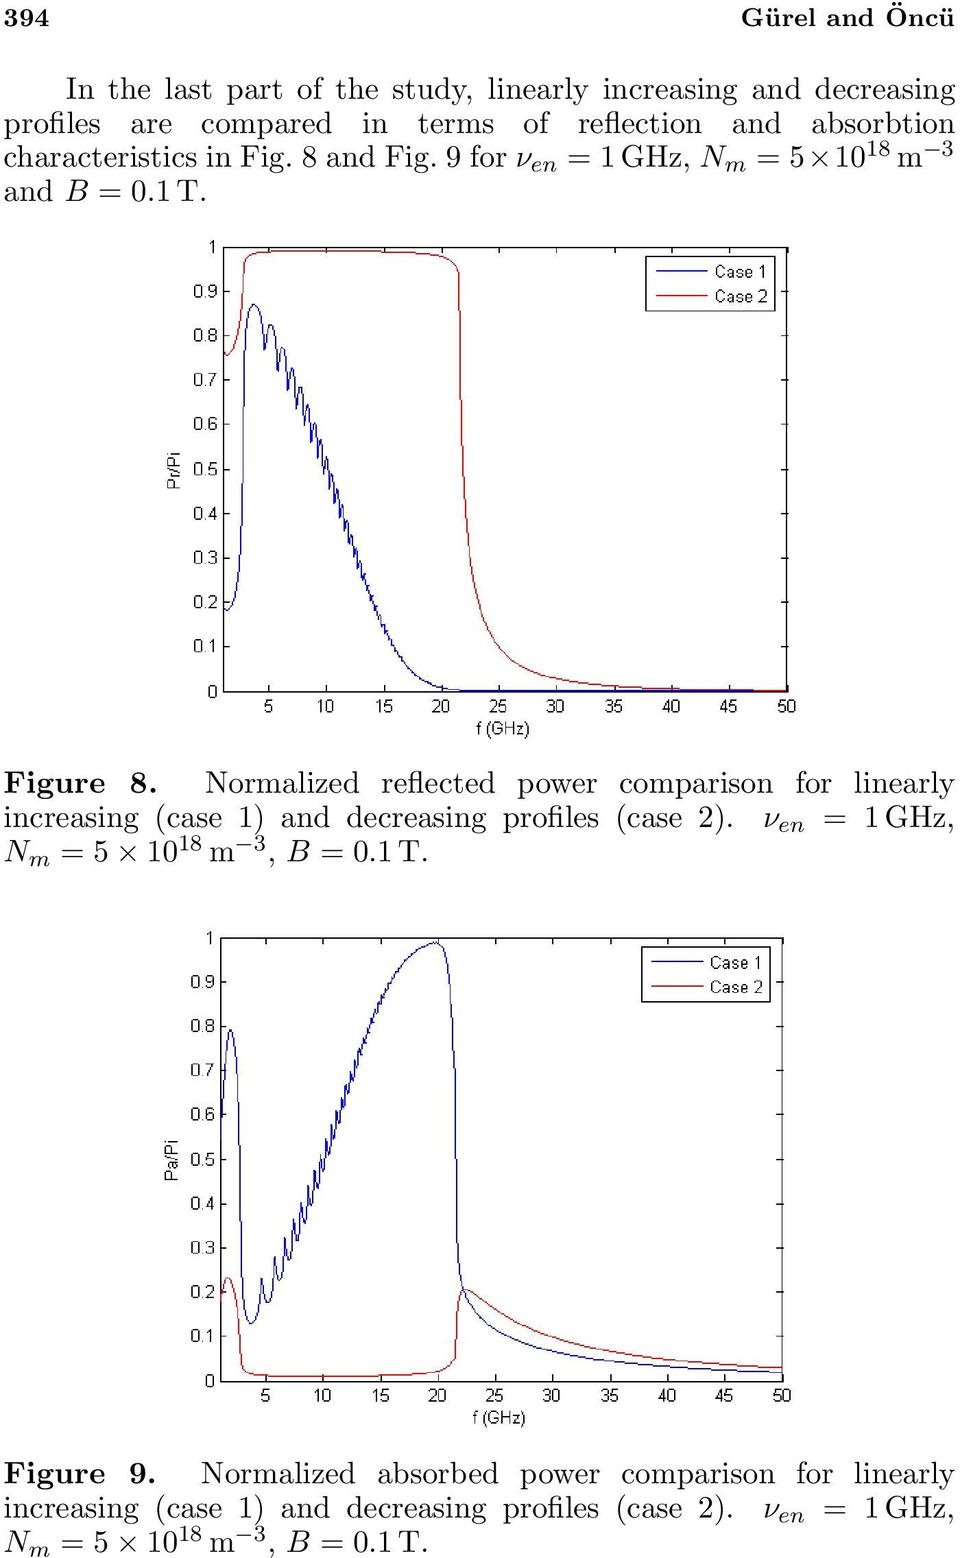 Normalizd rflctd powr comparison for linarly incrasing (cas 1) and dcrasing profils (cas 2).